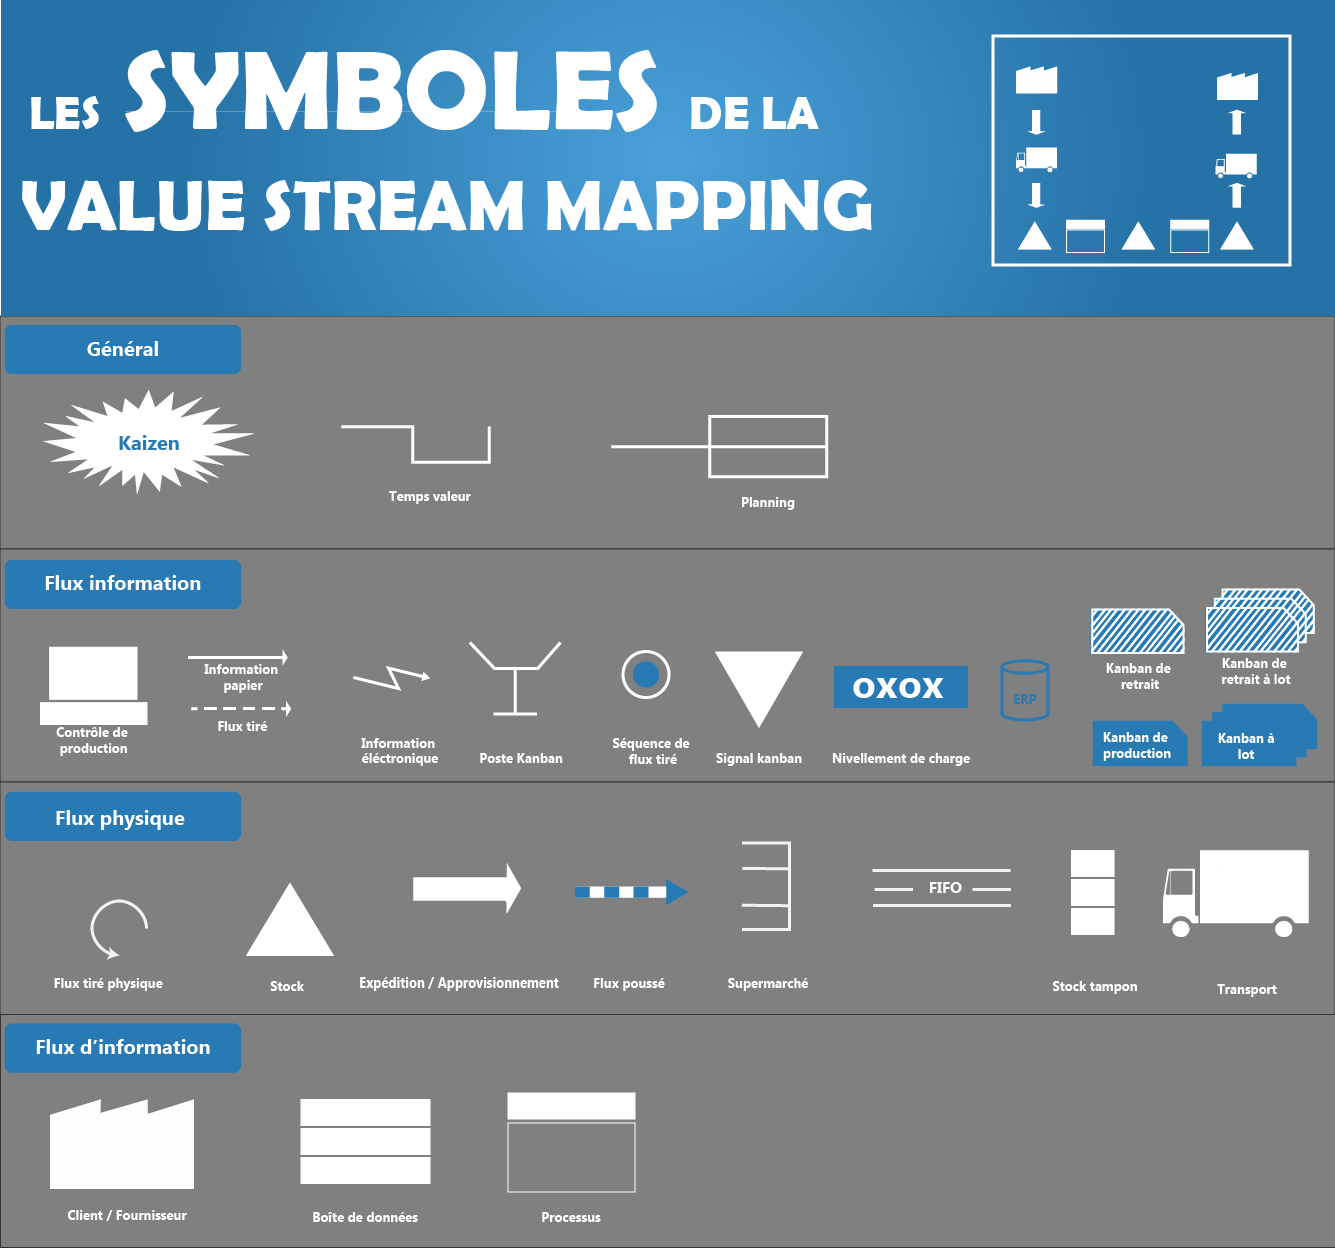 Les symboles de la value stream mapping